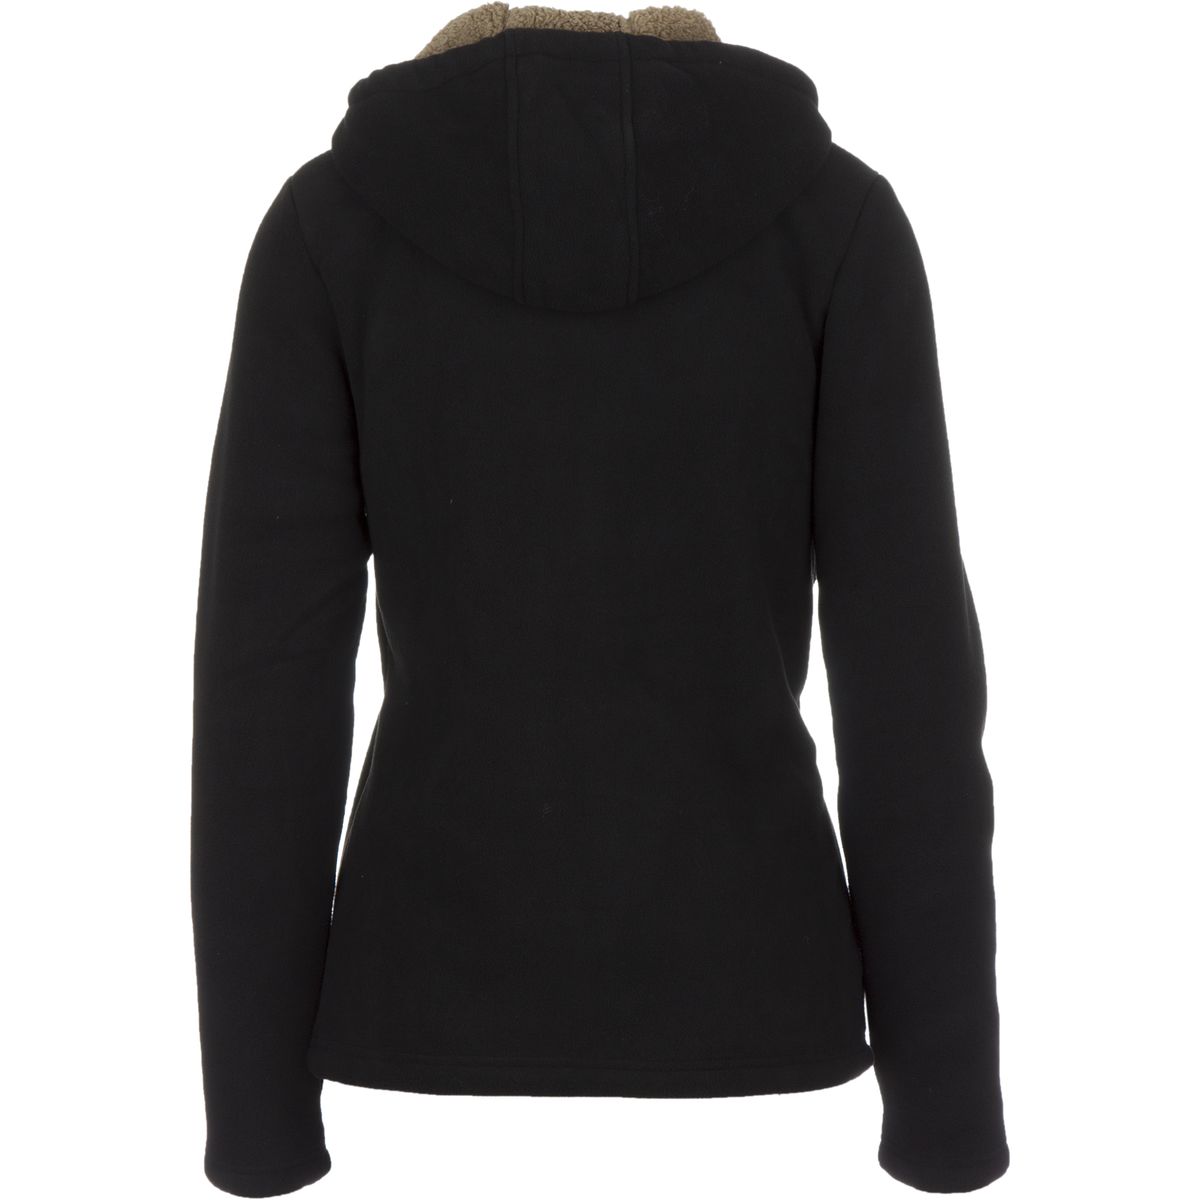 KAVU Harlow Full-Zip Hooded Jacket - Women's | Backcountry.com